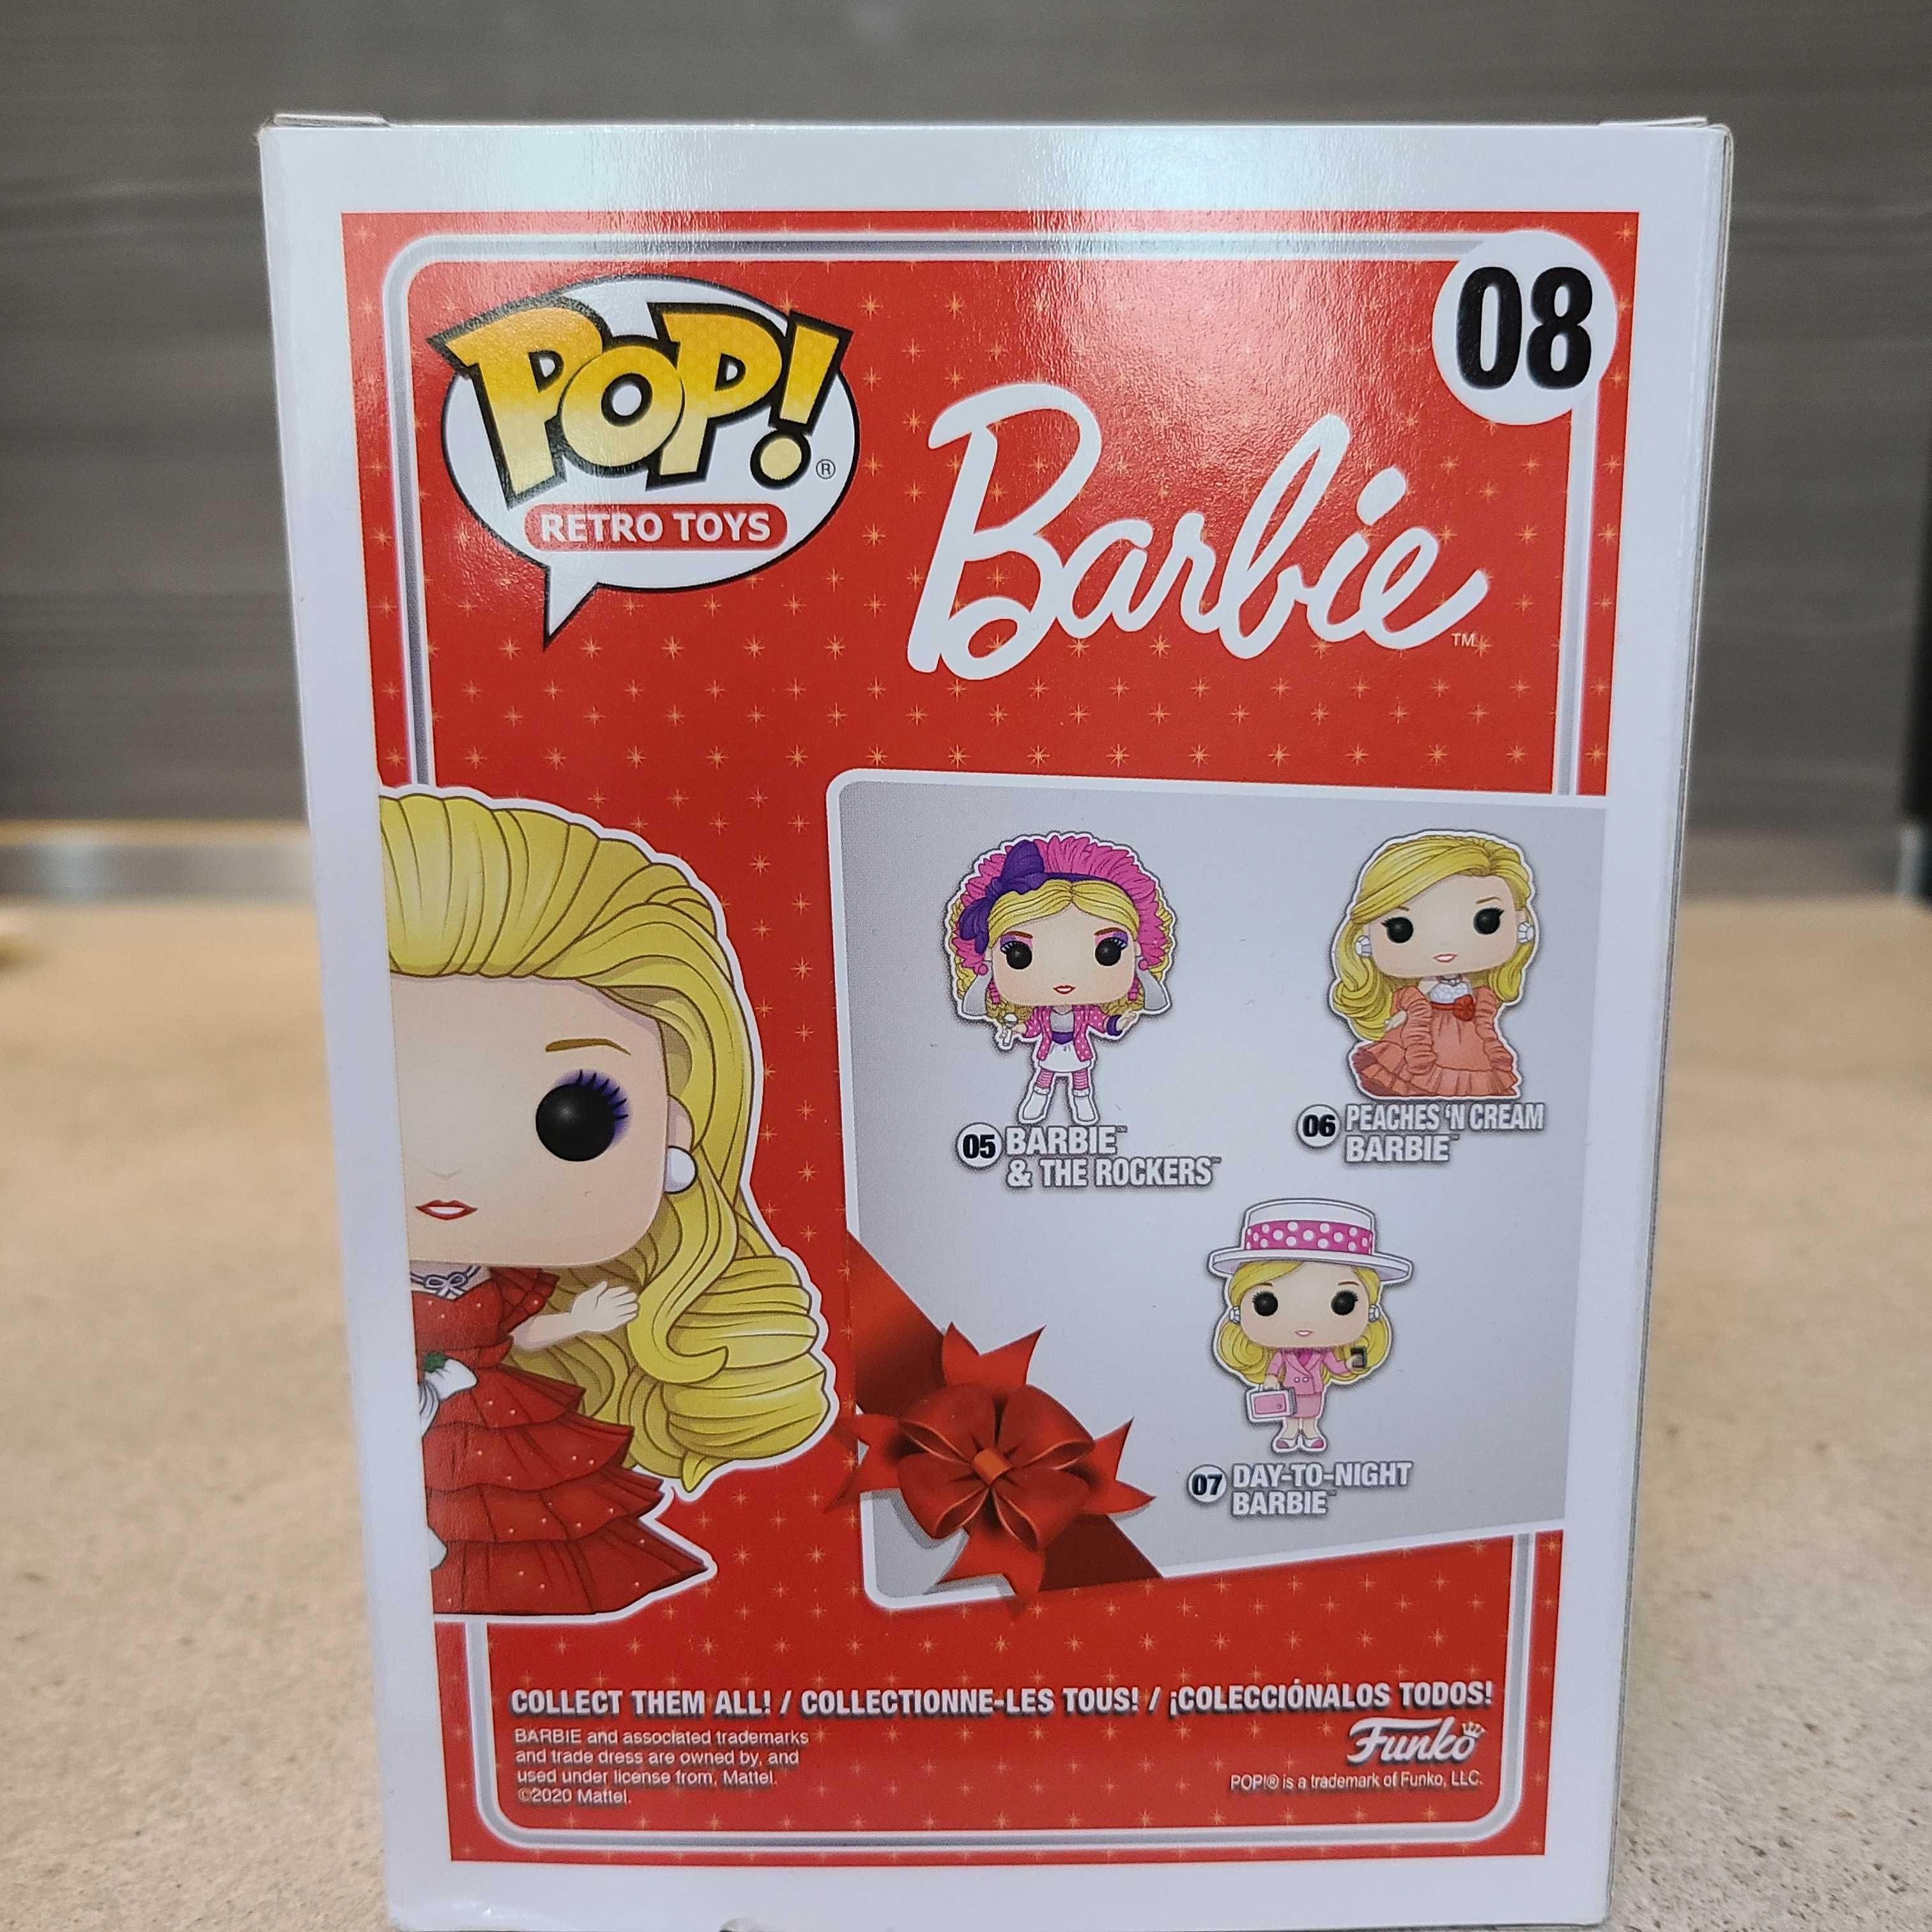 Кукли  Фънко ПОП Holiday Barbie  (08) и Super Saiyan Goku  (865)